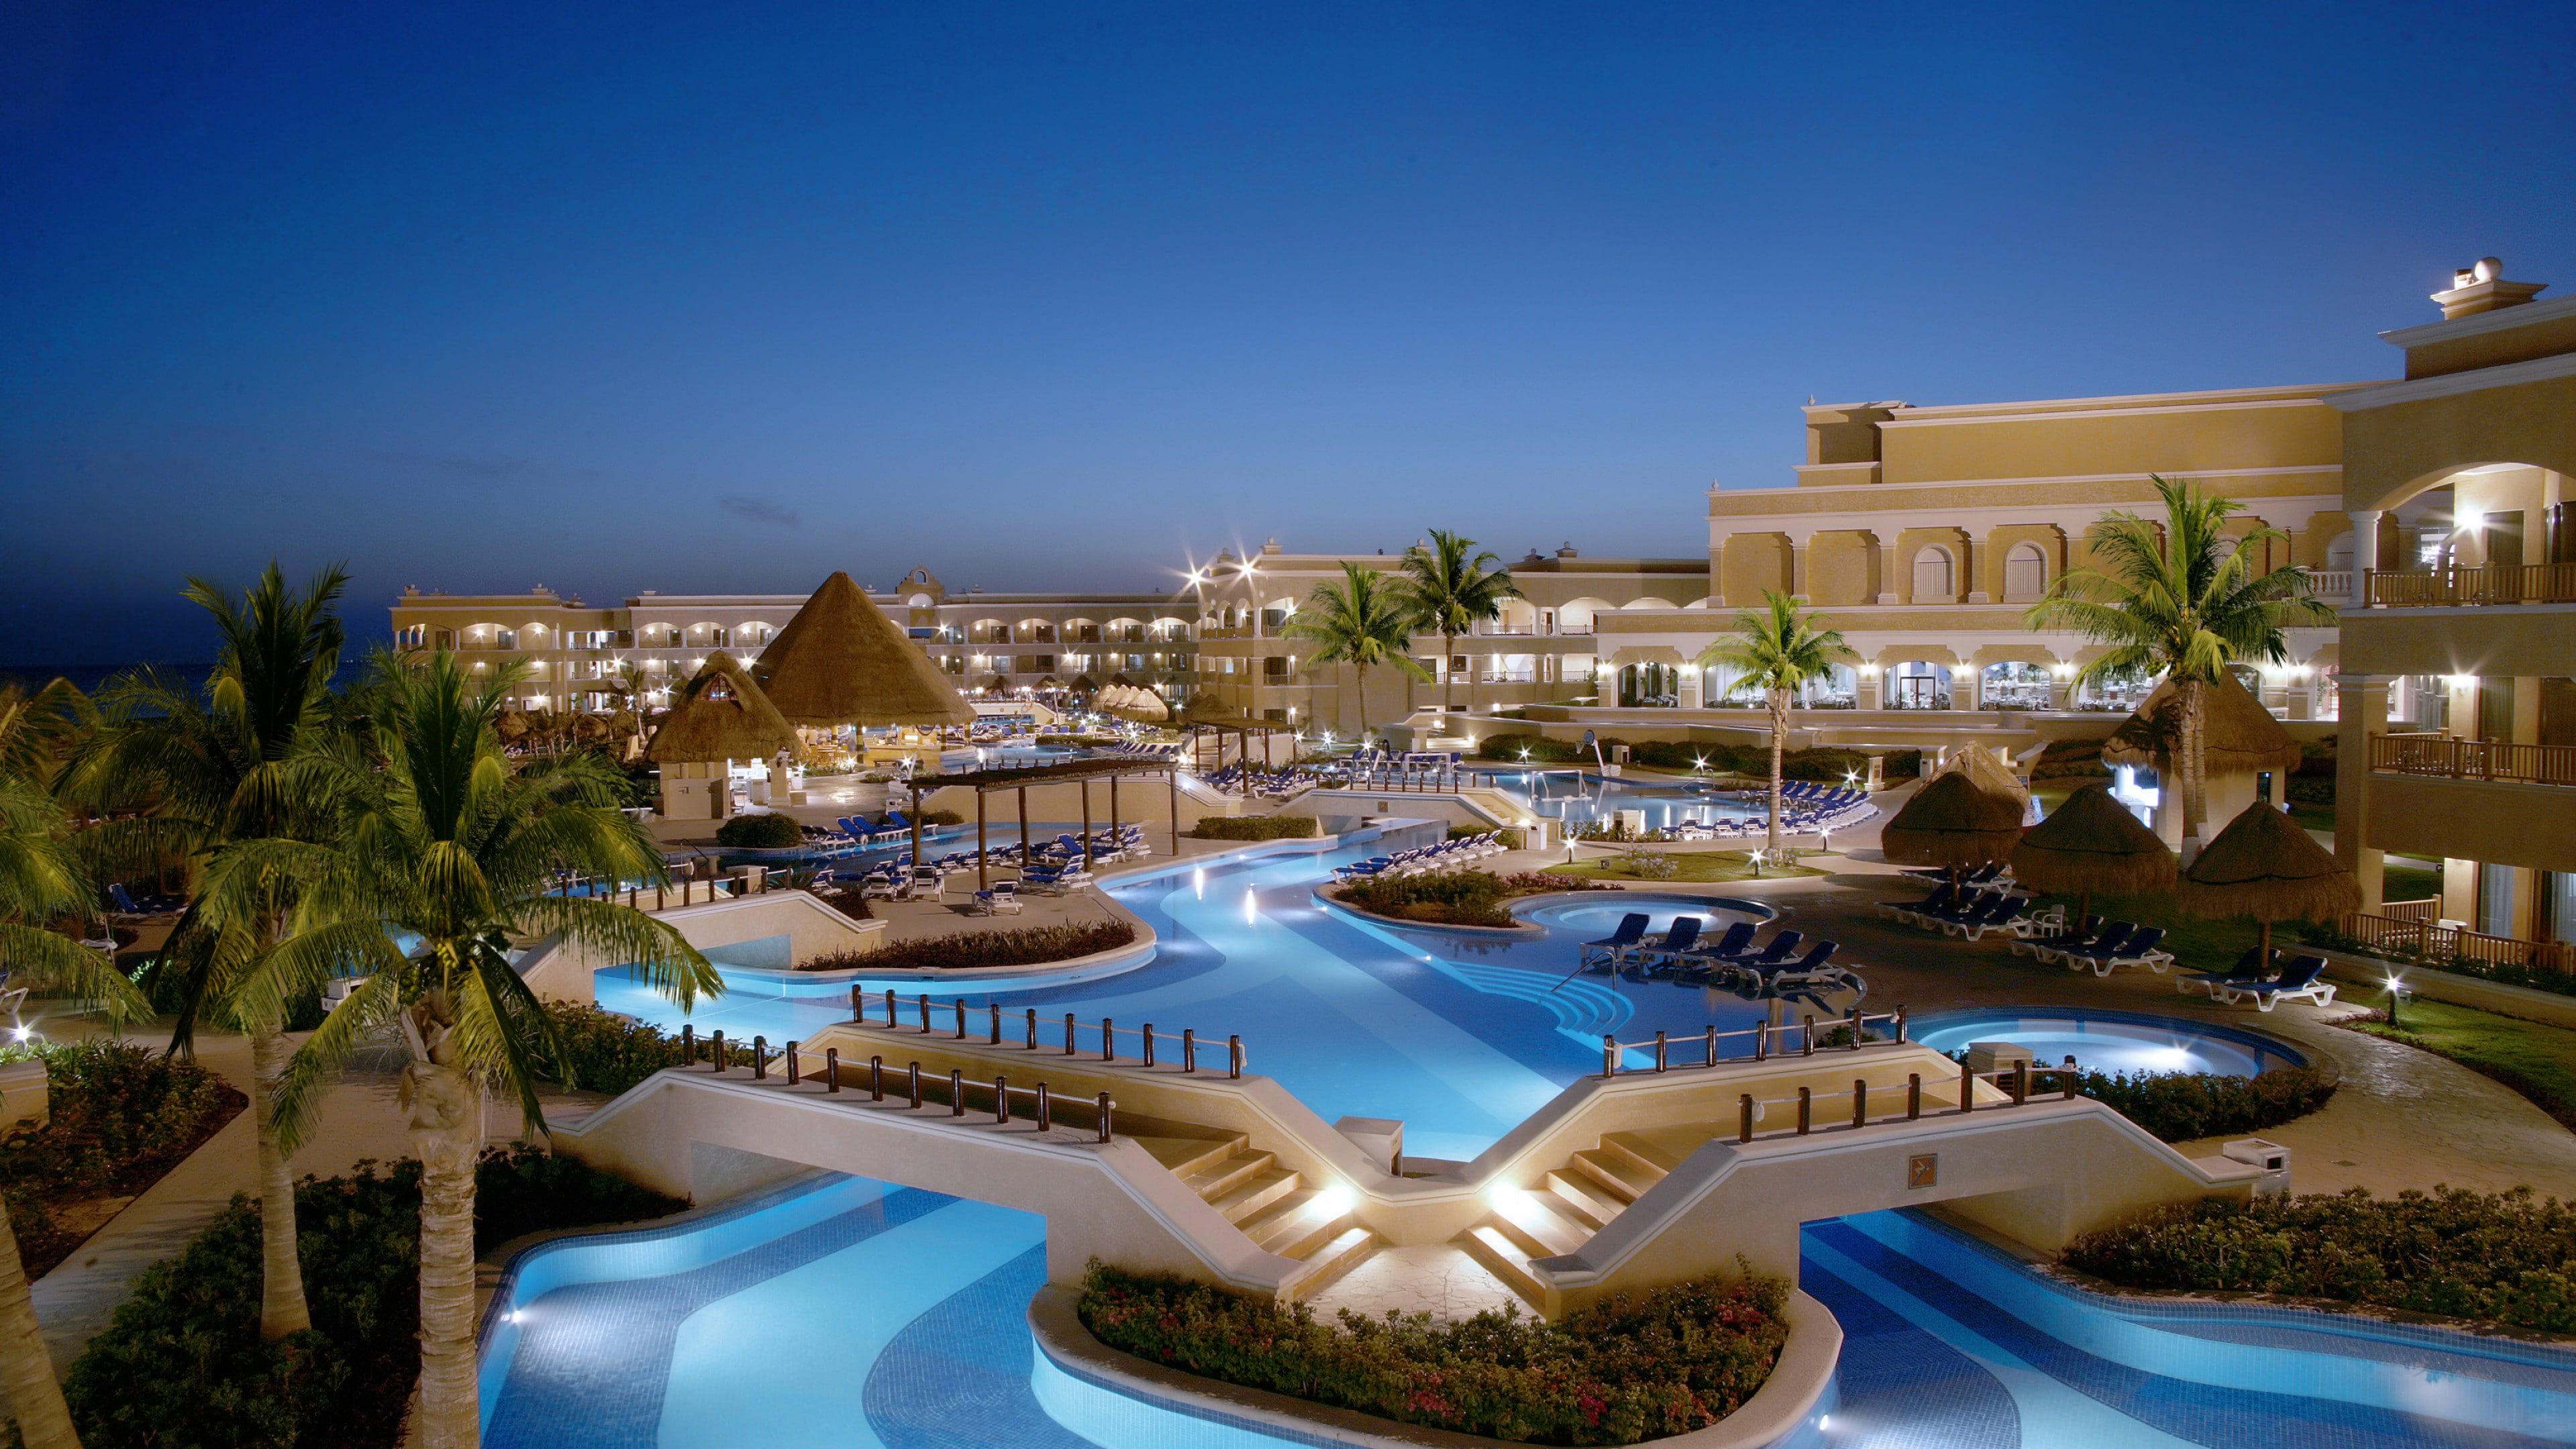 Grand Velas Riviera Maya, Best Hotels of 2017, tourism, travel